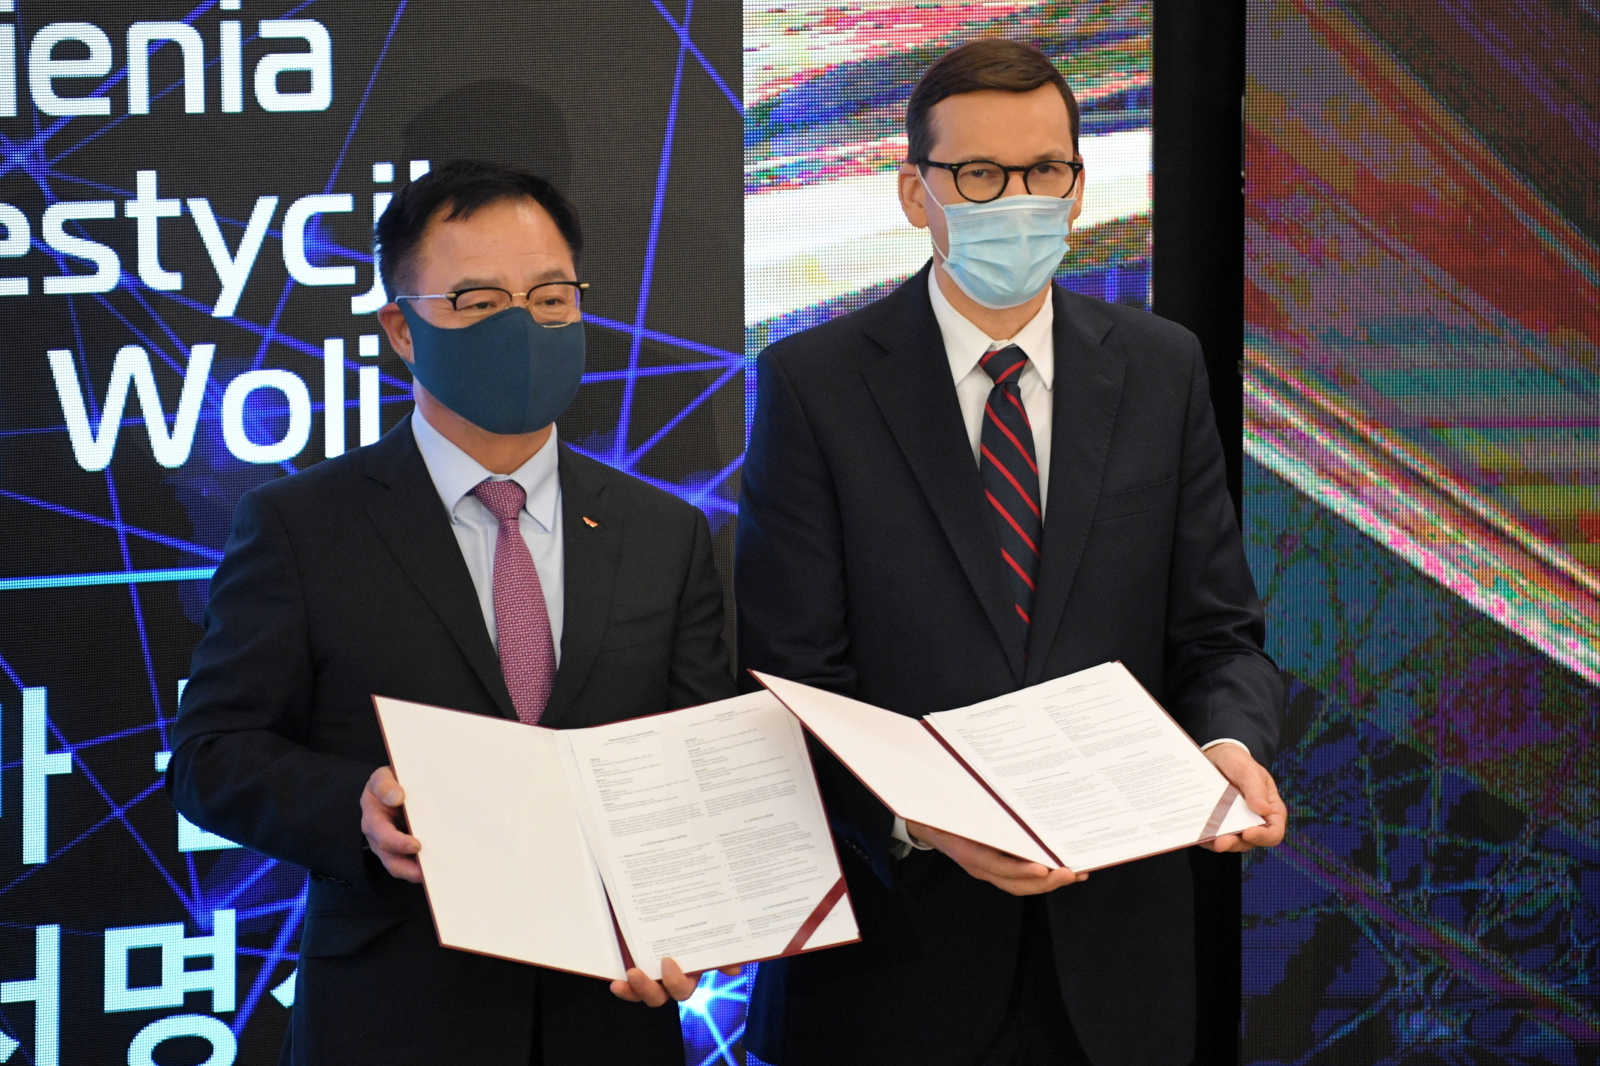 Na zdjęciu Mateusz Morawiecki, premier Polski oraz Wan-Jae Lee, prezes SKC (fot. PAP/Darek Delmanowicz)